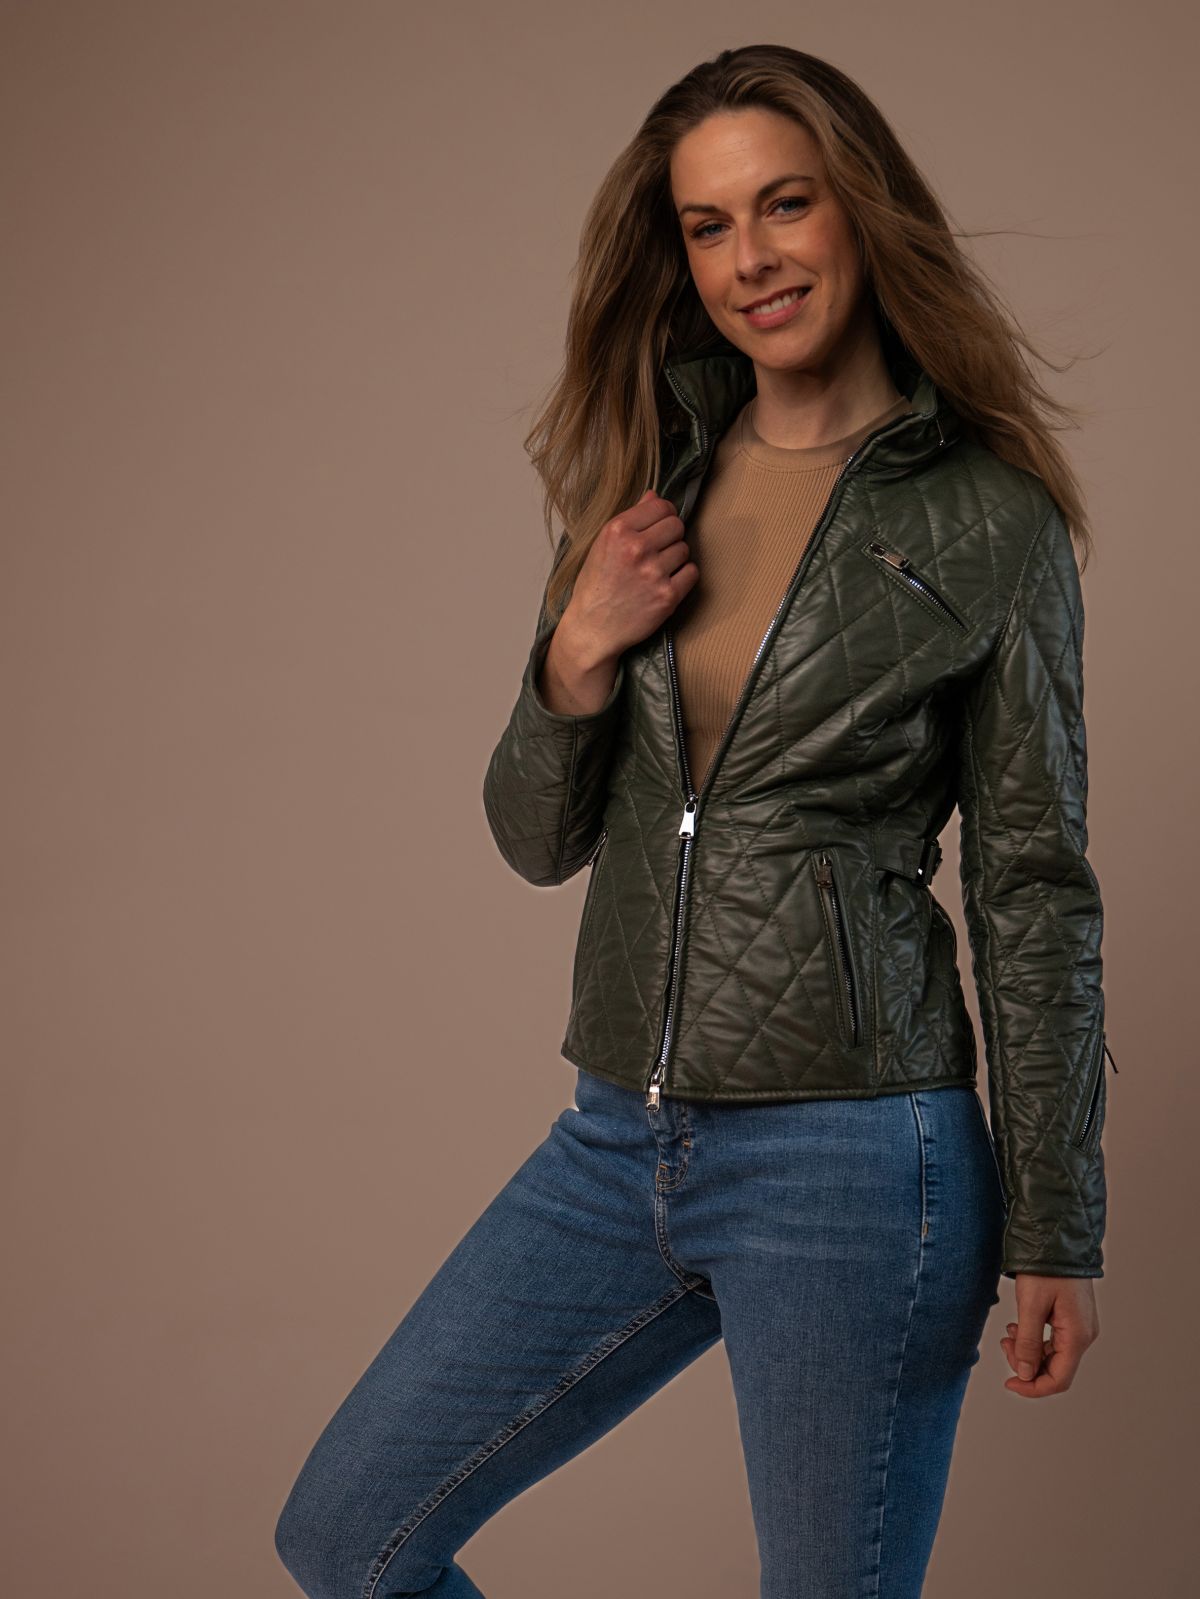 Virginia Ladies Quilted Leather 2.499,00 Jacket, €